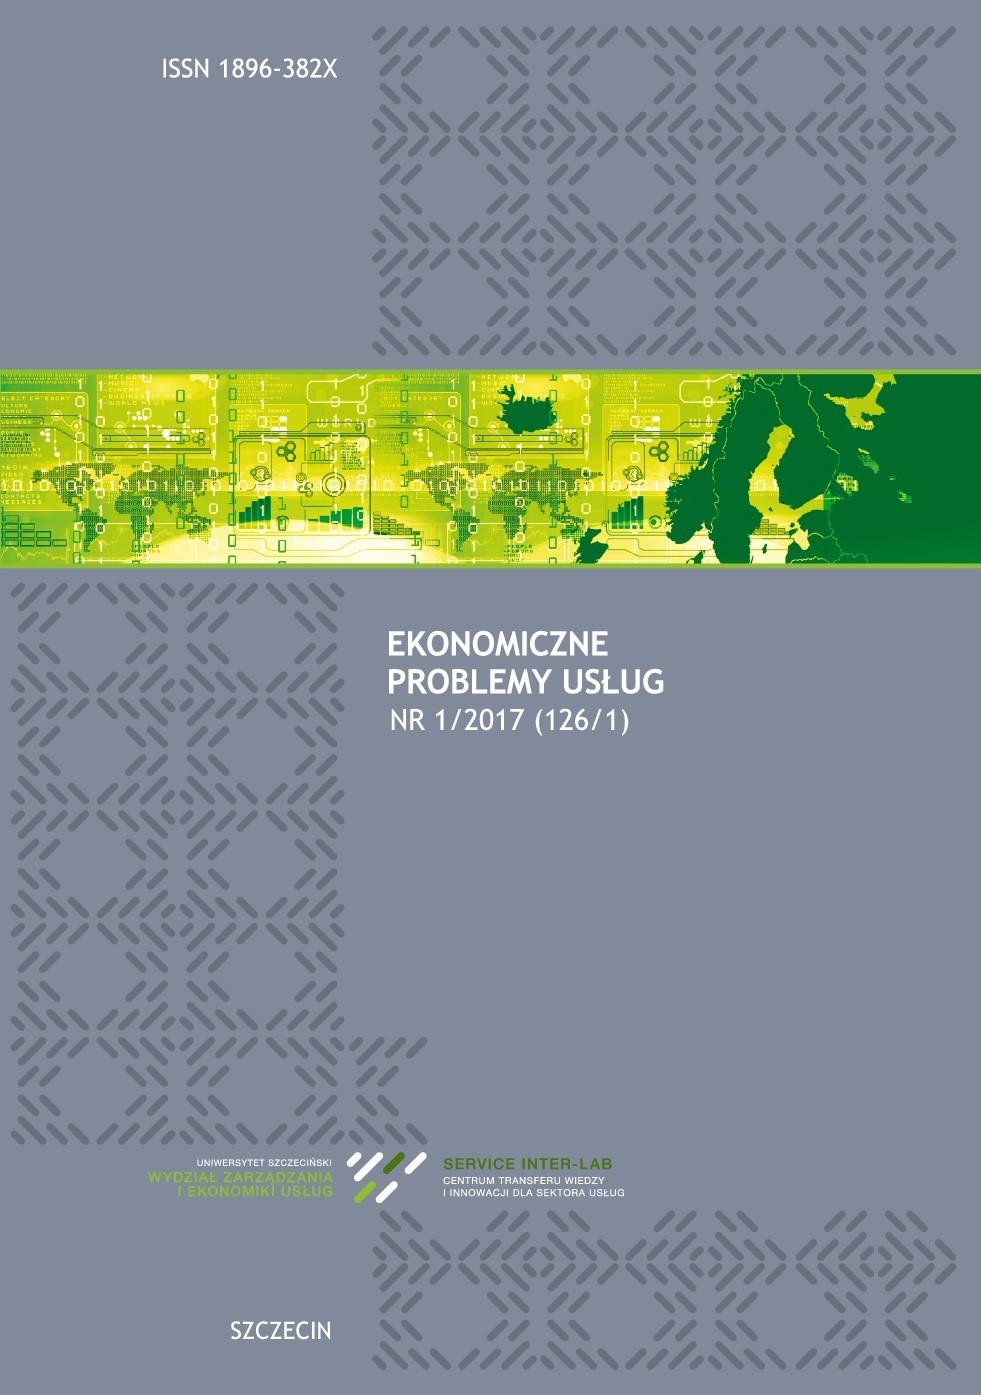 Regulation and institutional framework Cover Image